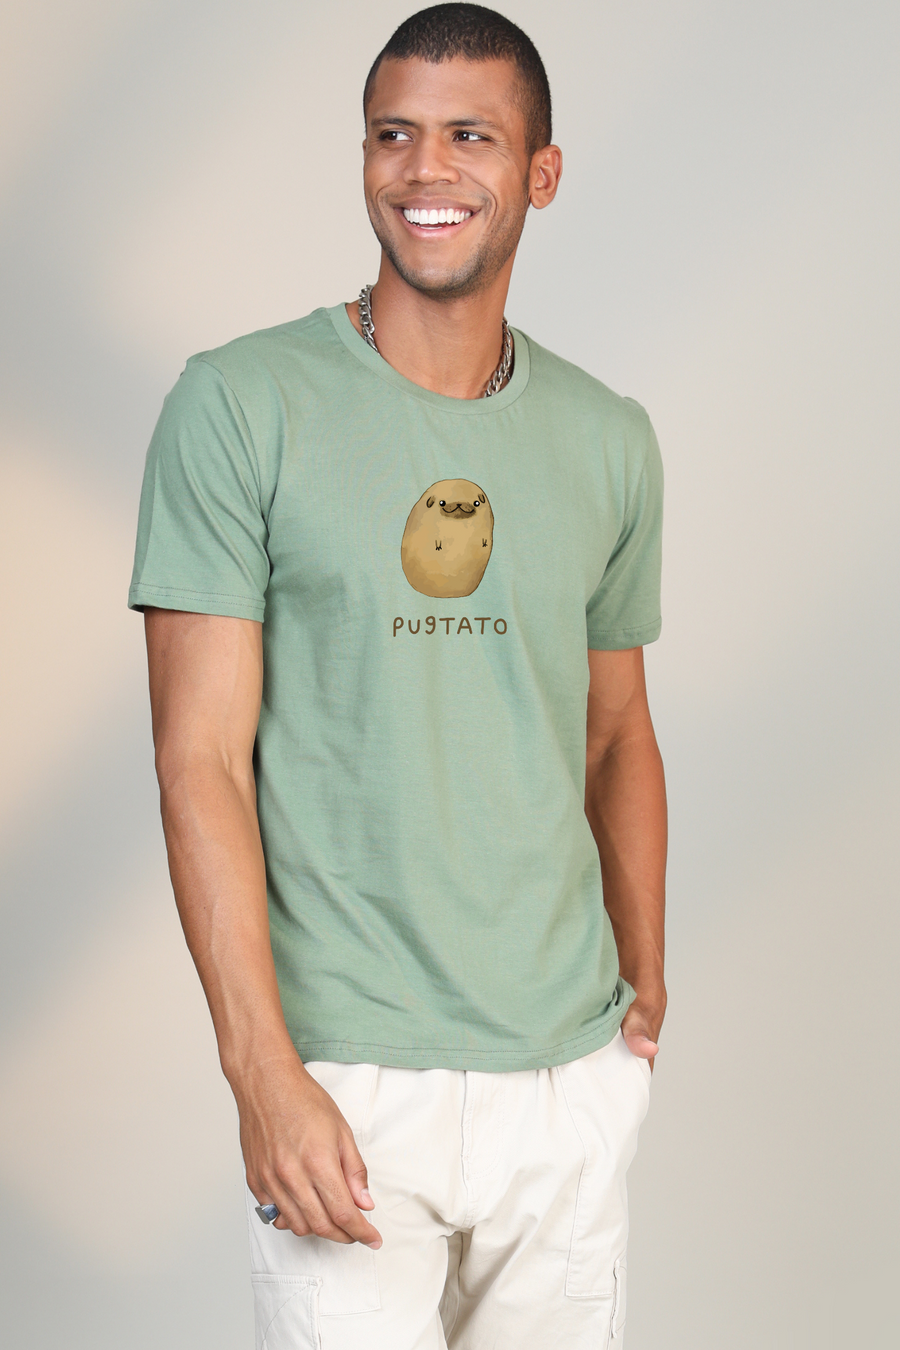 Pugtato- Half sleeve t-shirt - Botnia